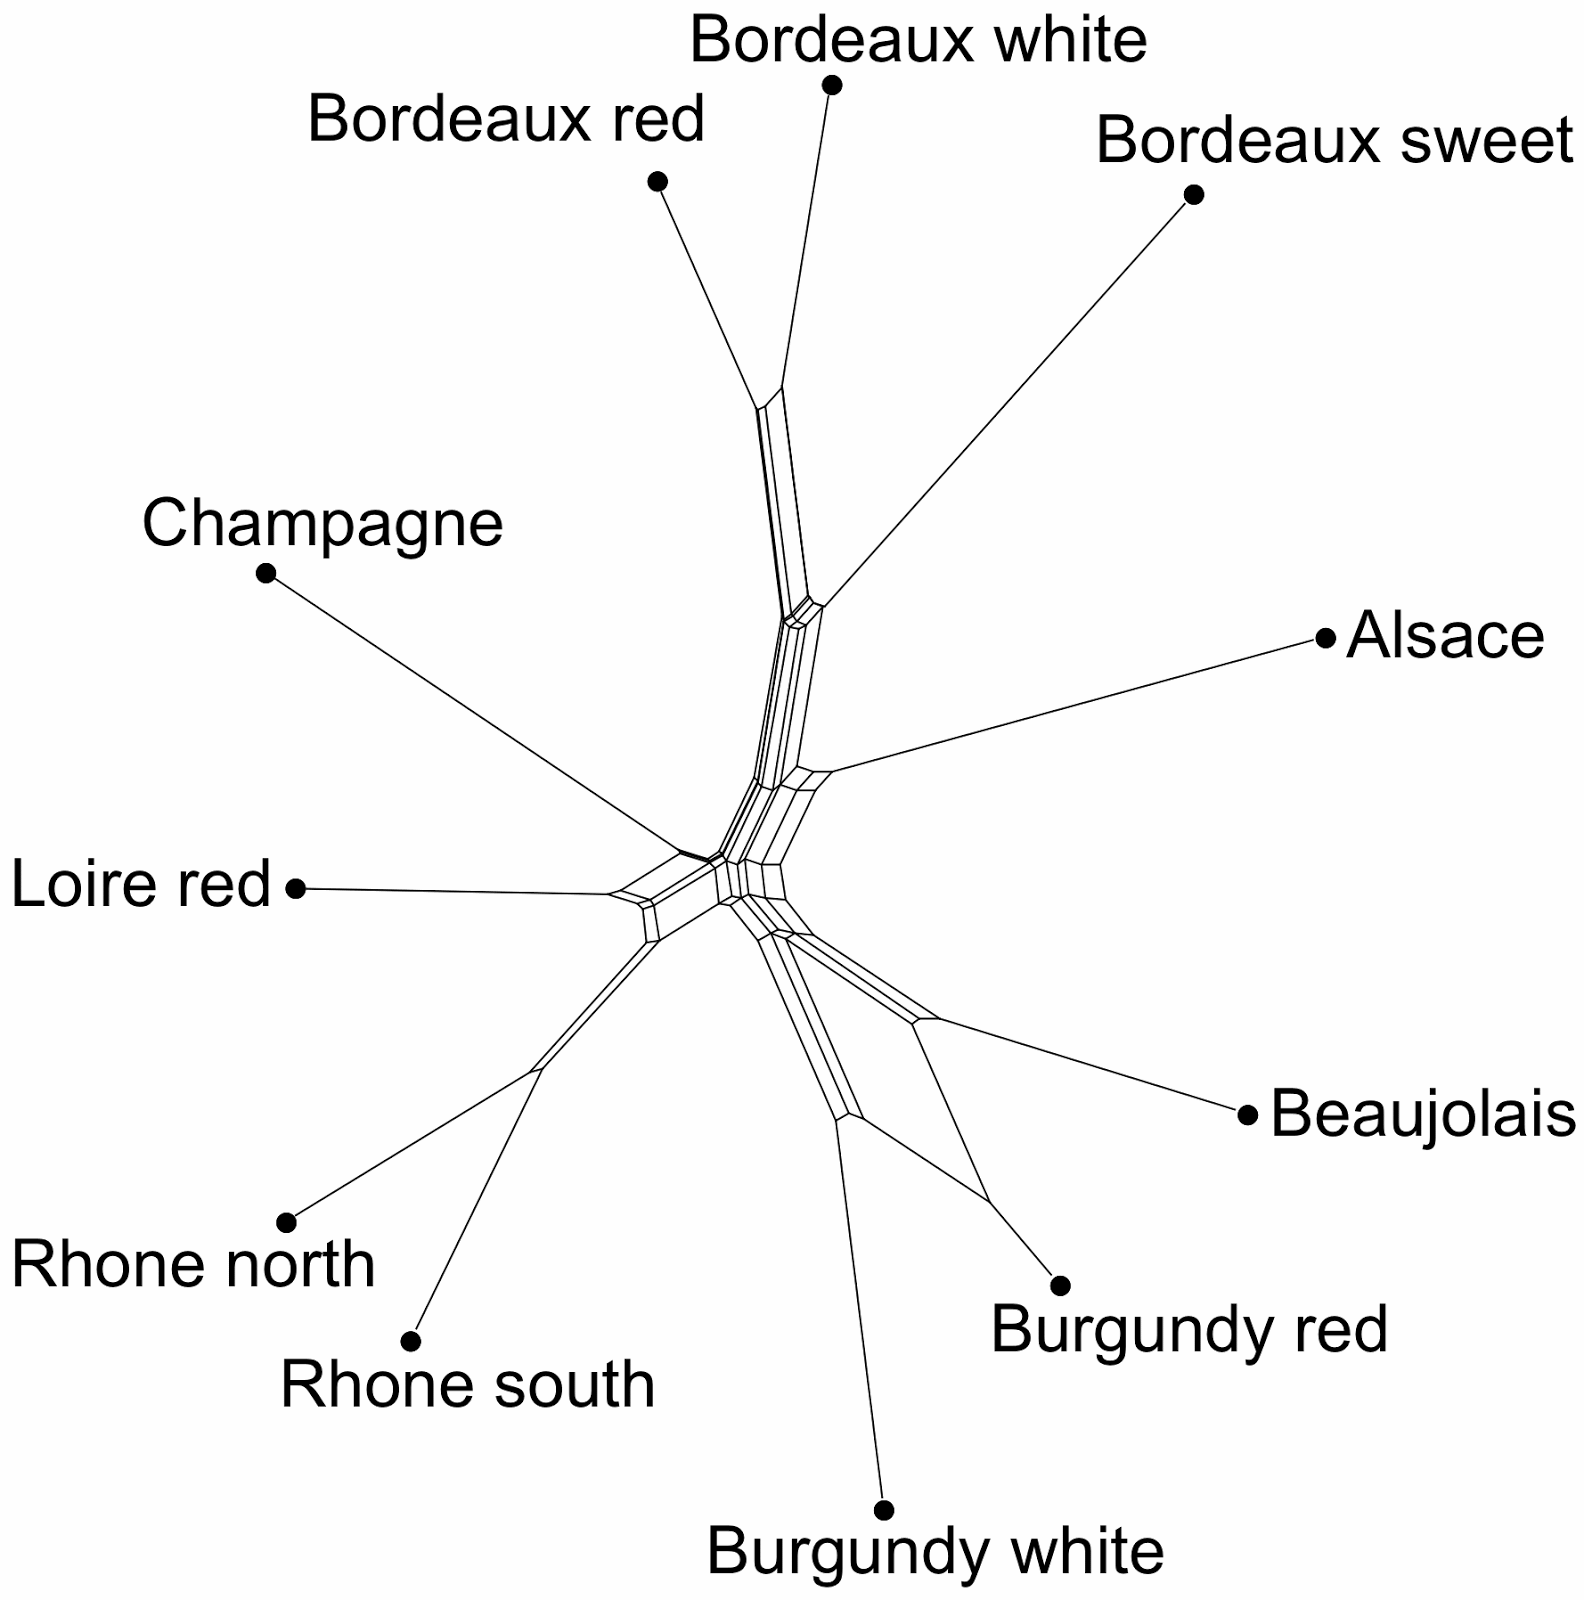 2005 Burgundy Vintage Chart